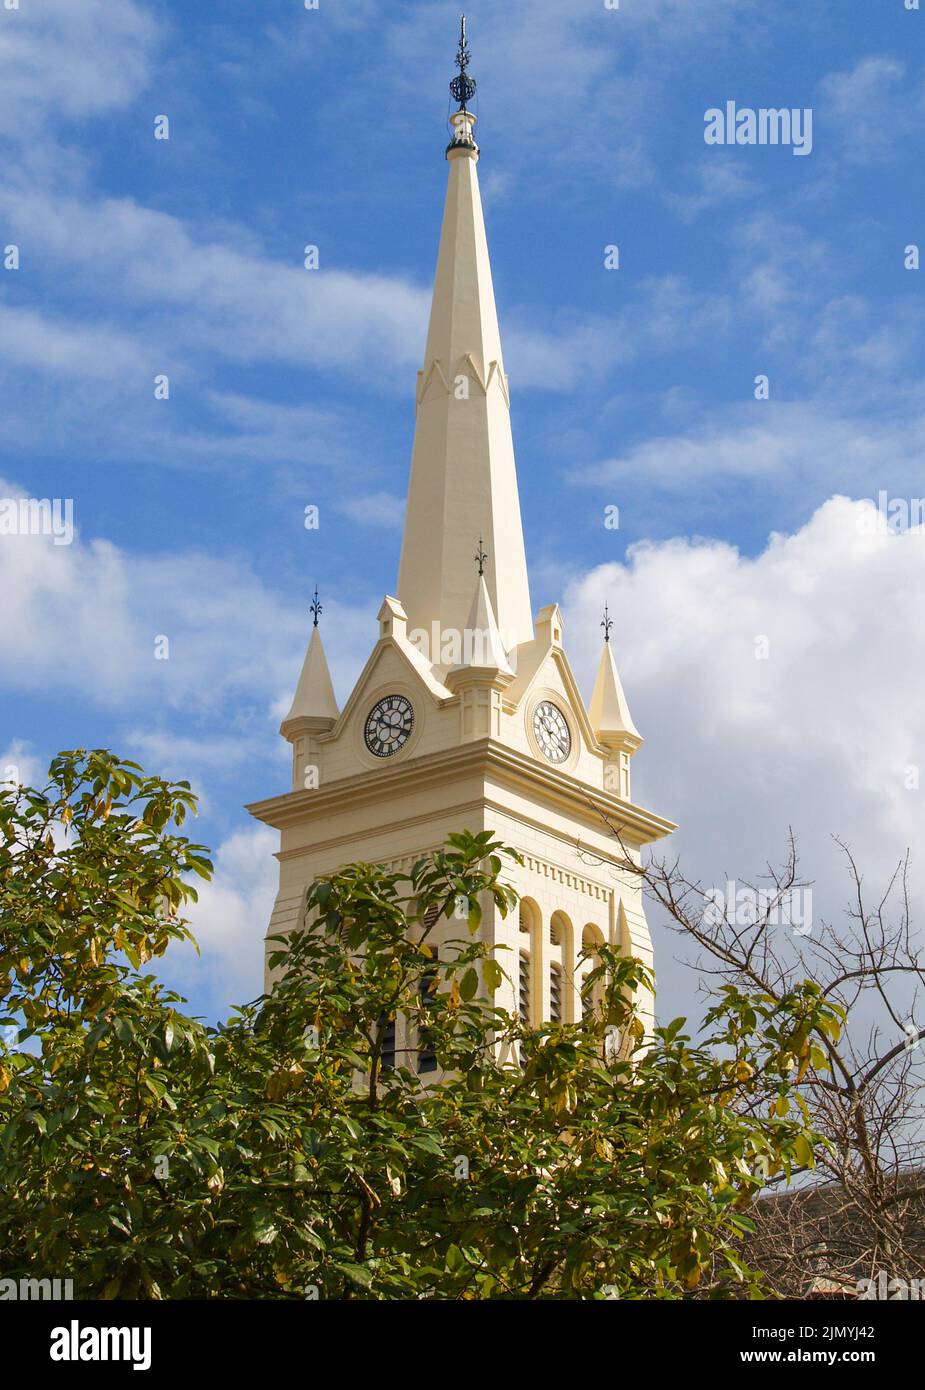 Church spire with clocks rising skyward Stock Photo